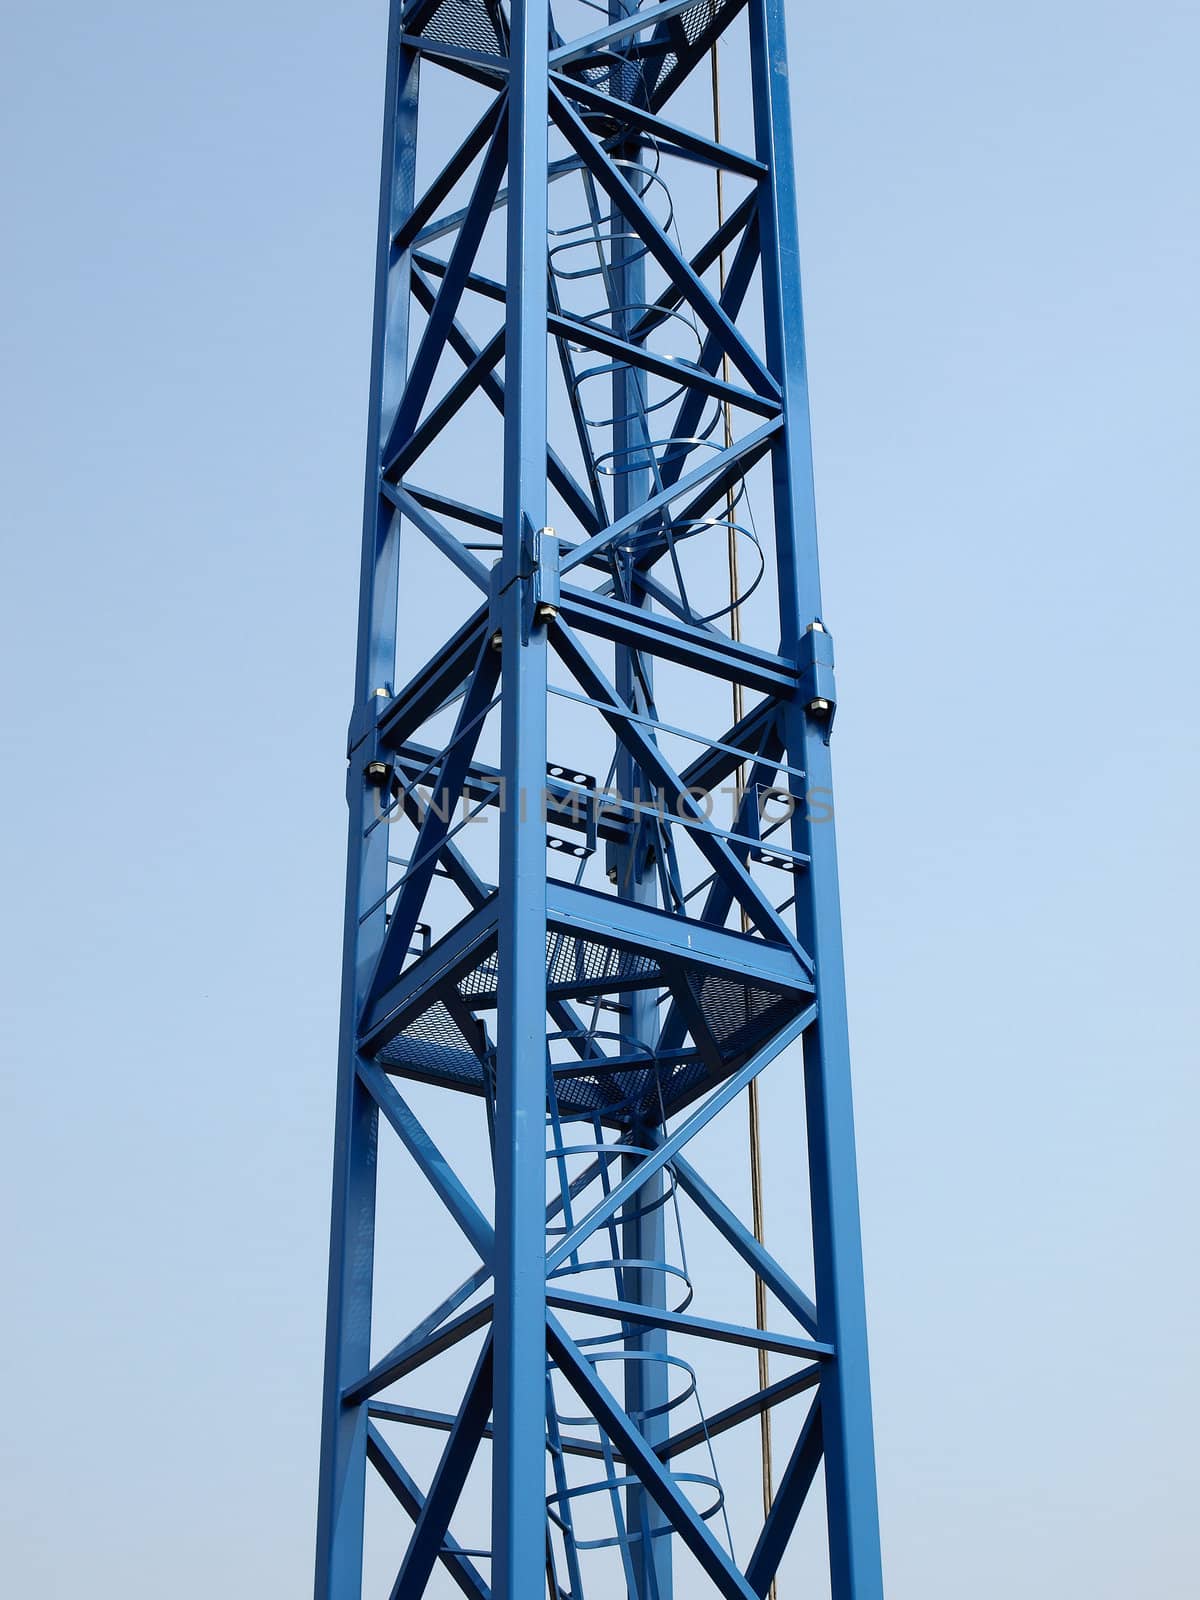 Tower crane by claudiodivizia